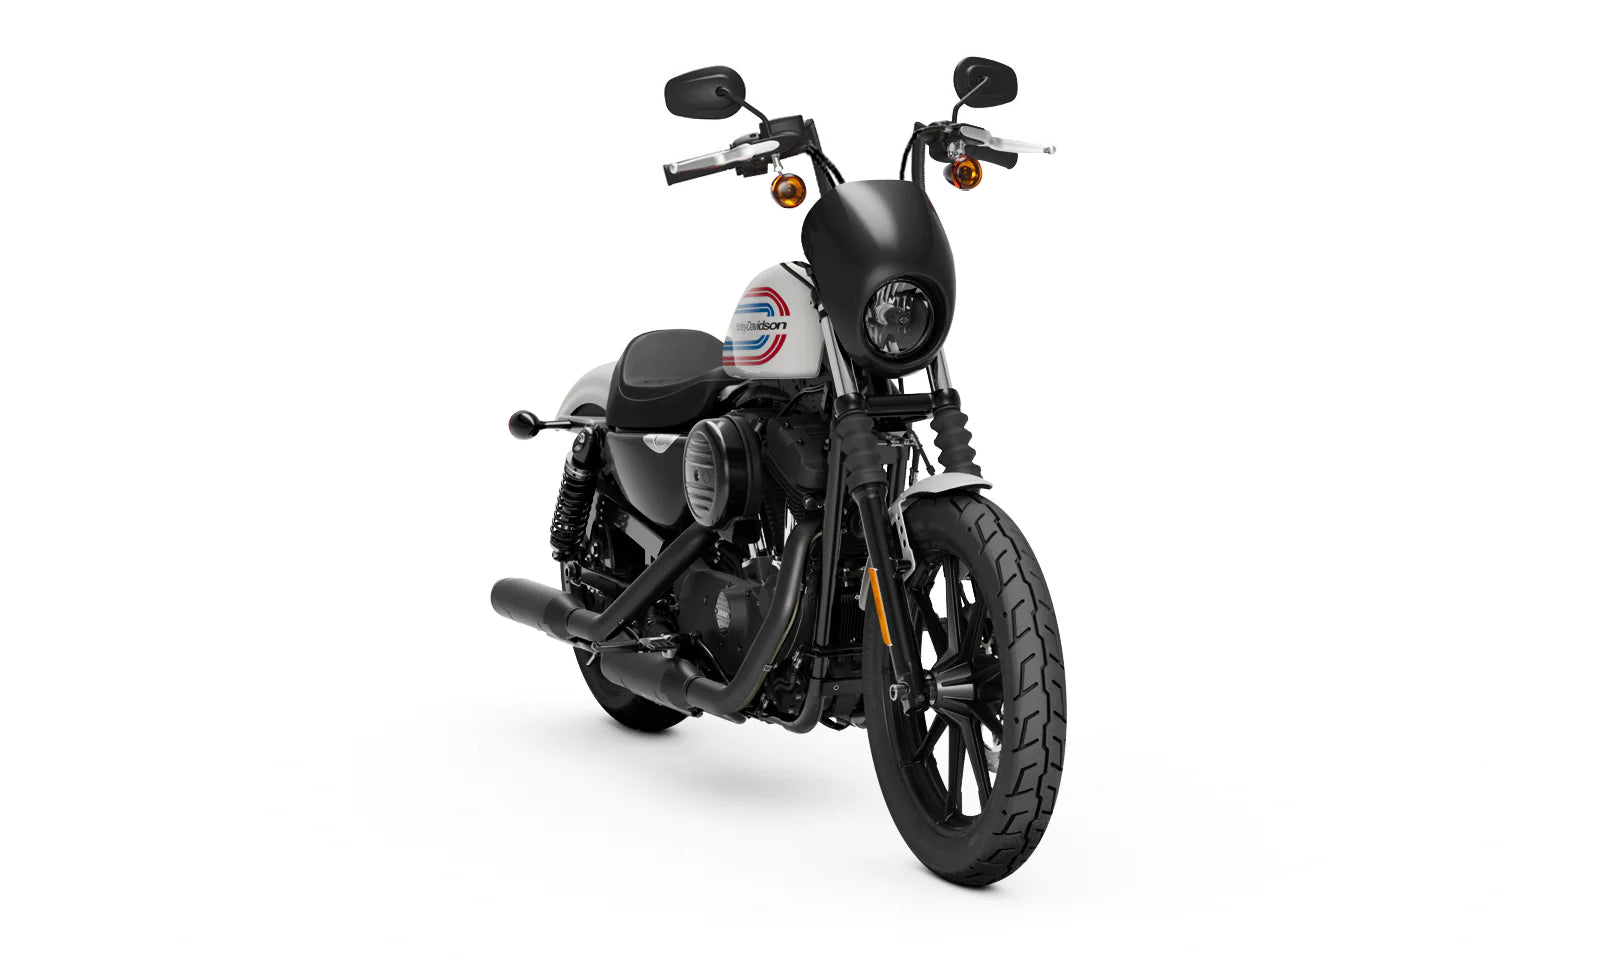 Viking Iron Born 9" Handlebar for Harley Sportster Iron 1200 Matte Black Bag on Bike View @expand